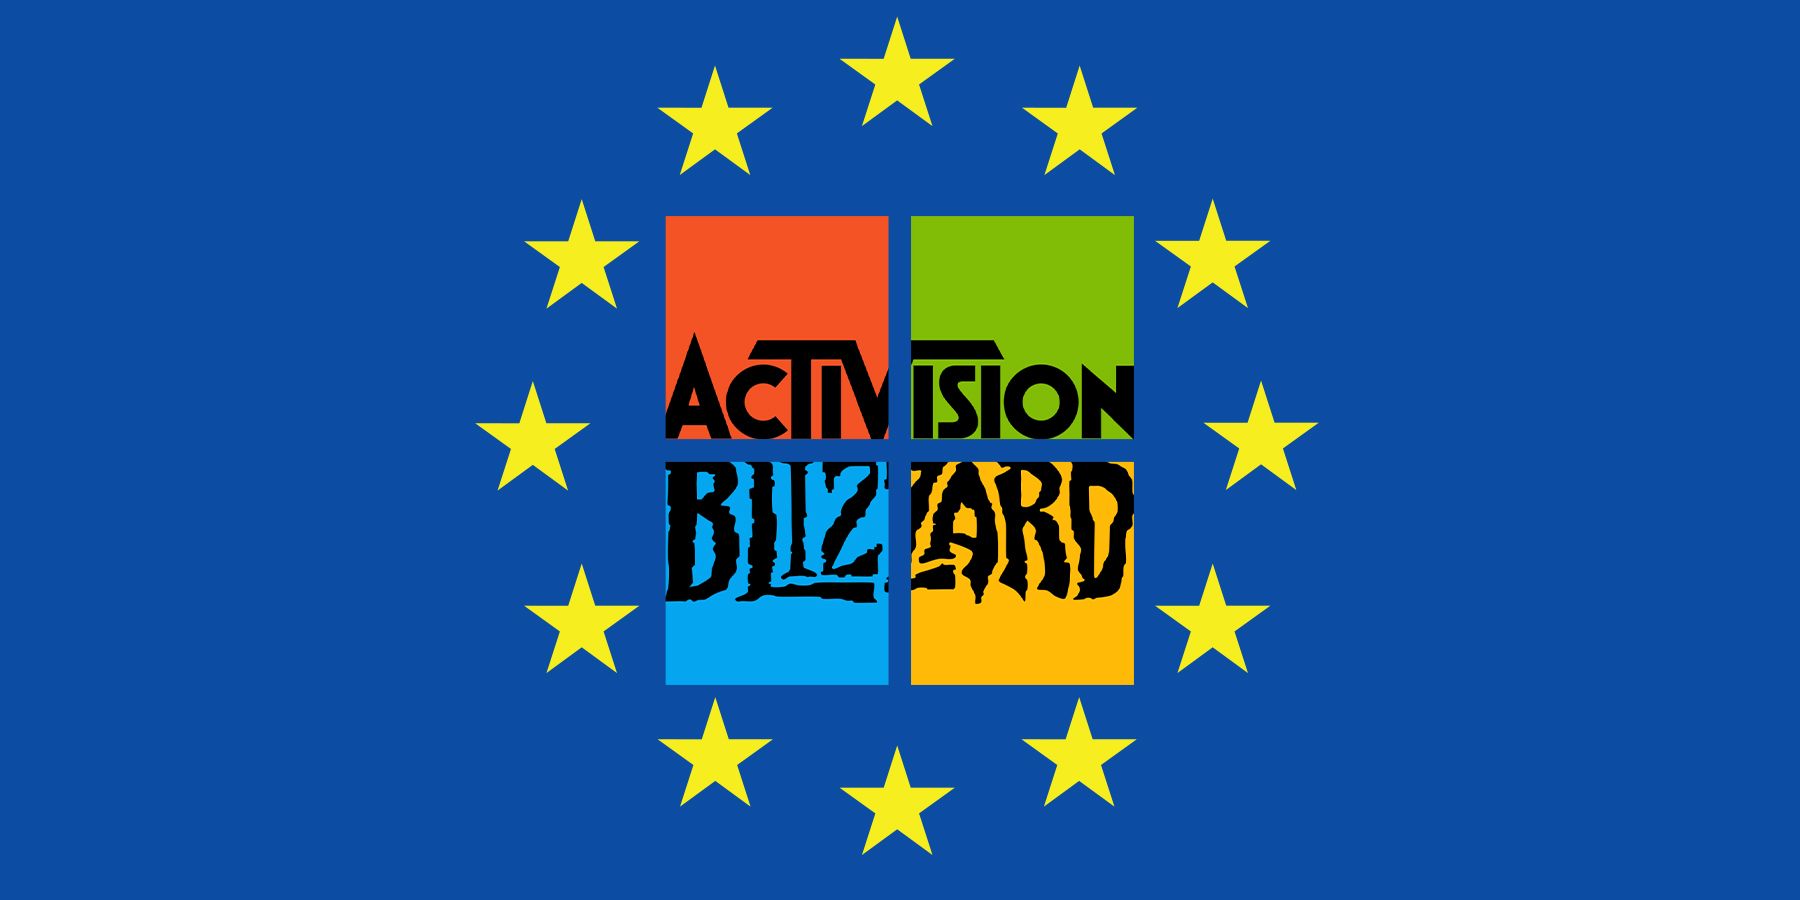 Microsoft Activision Blizzard logos inside European Union flag